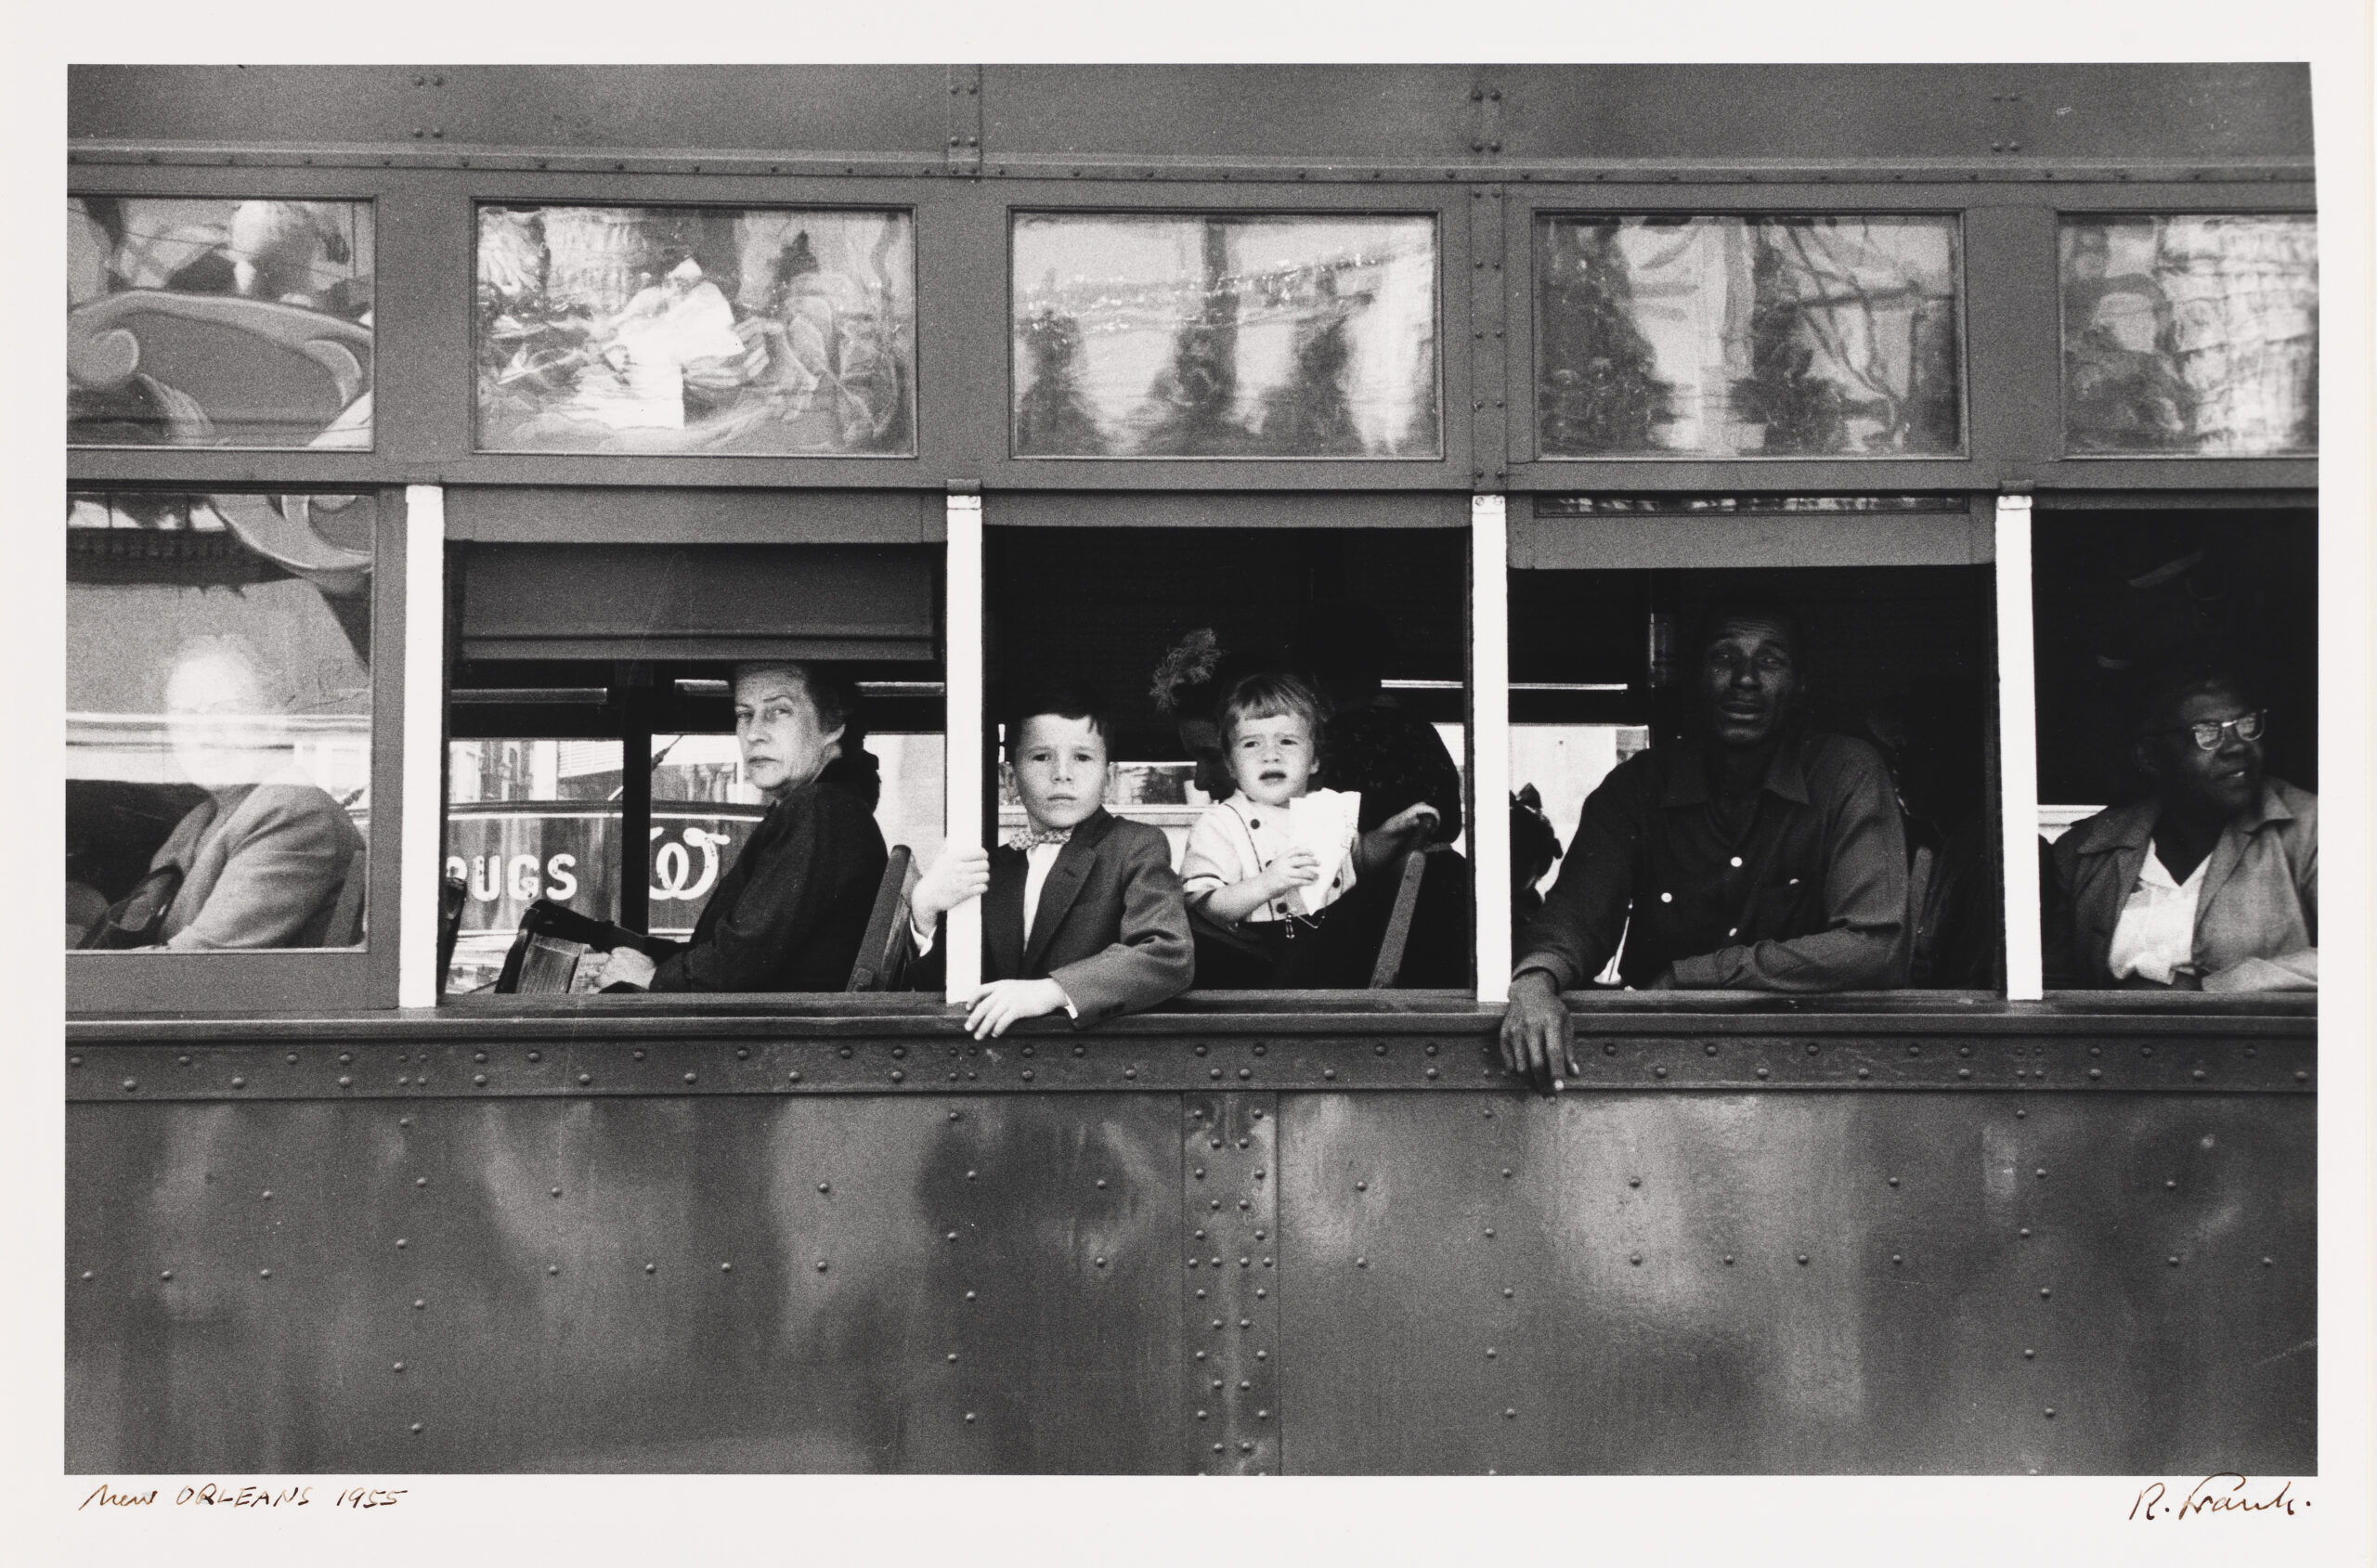 Robert Frank, Trolley, New Orleans, 1955